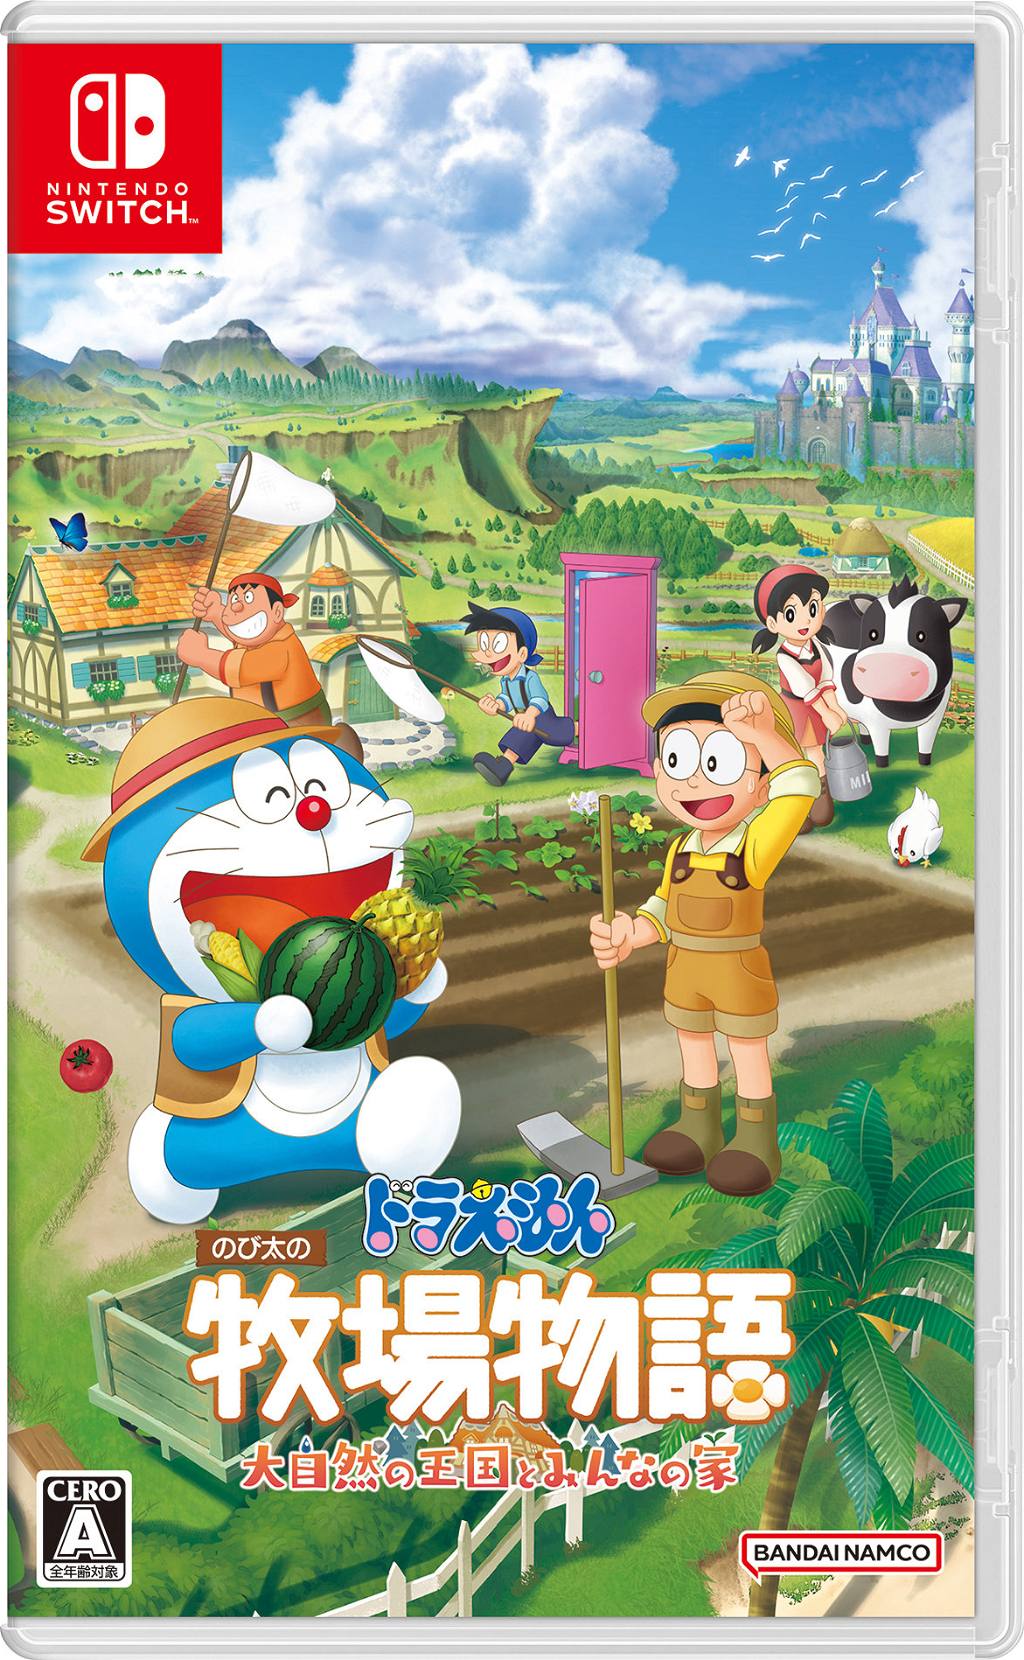 Doraemon: Story of Seasons - of the Great Kingdom (Multi-Language) for Nintendo Switch